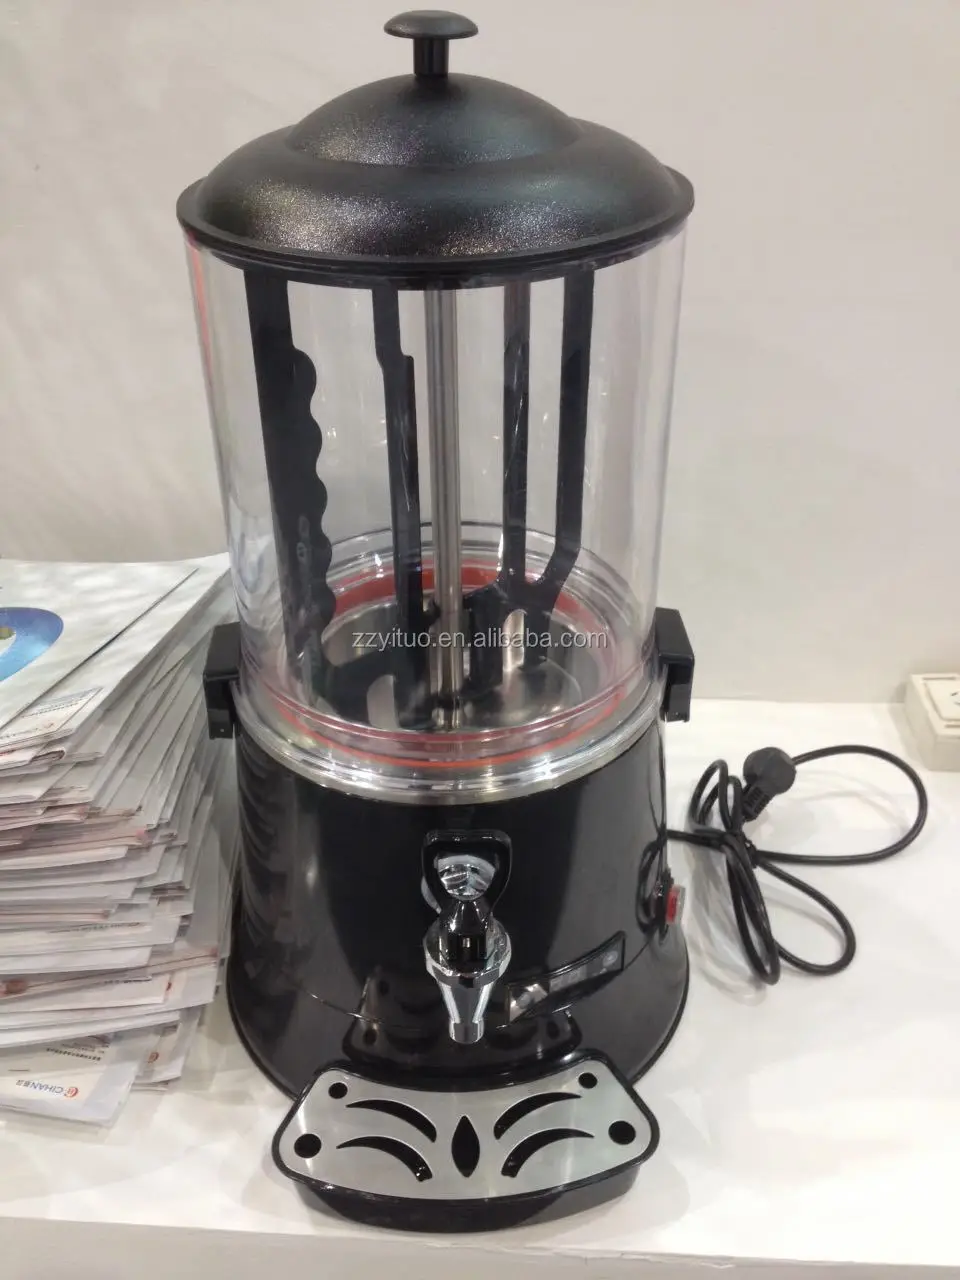 NEW 10L Commercial Hot Chocolate Machine Maker Beverage Warmer Champurrado